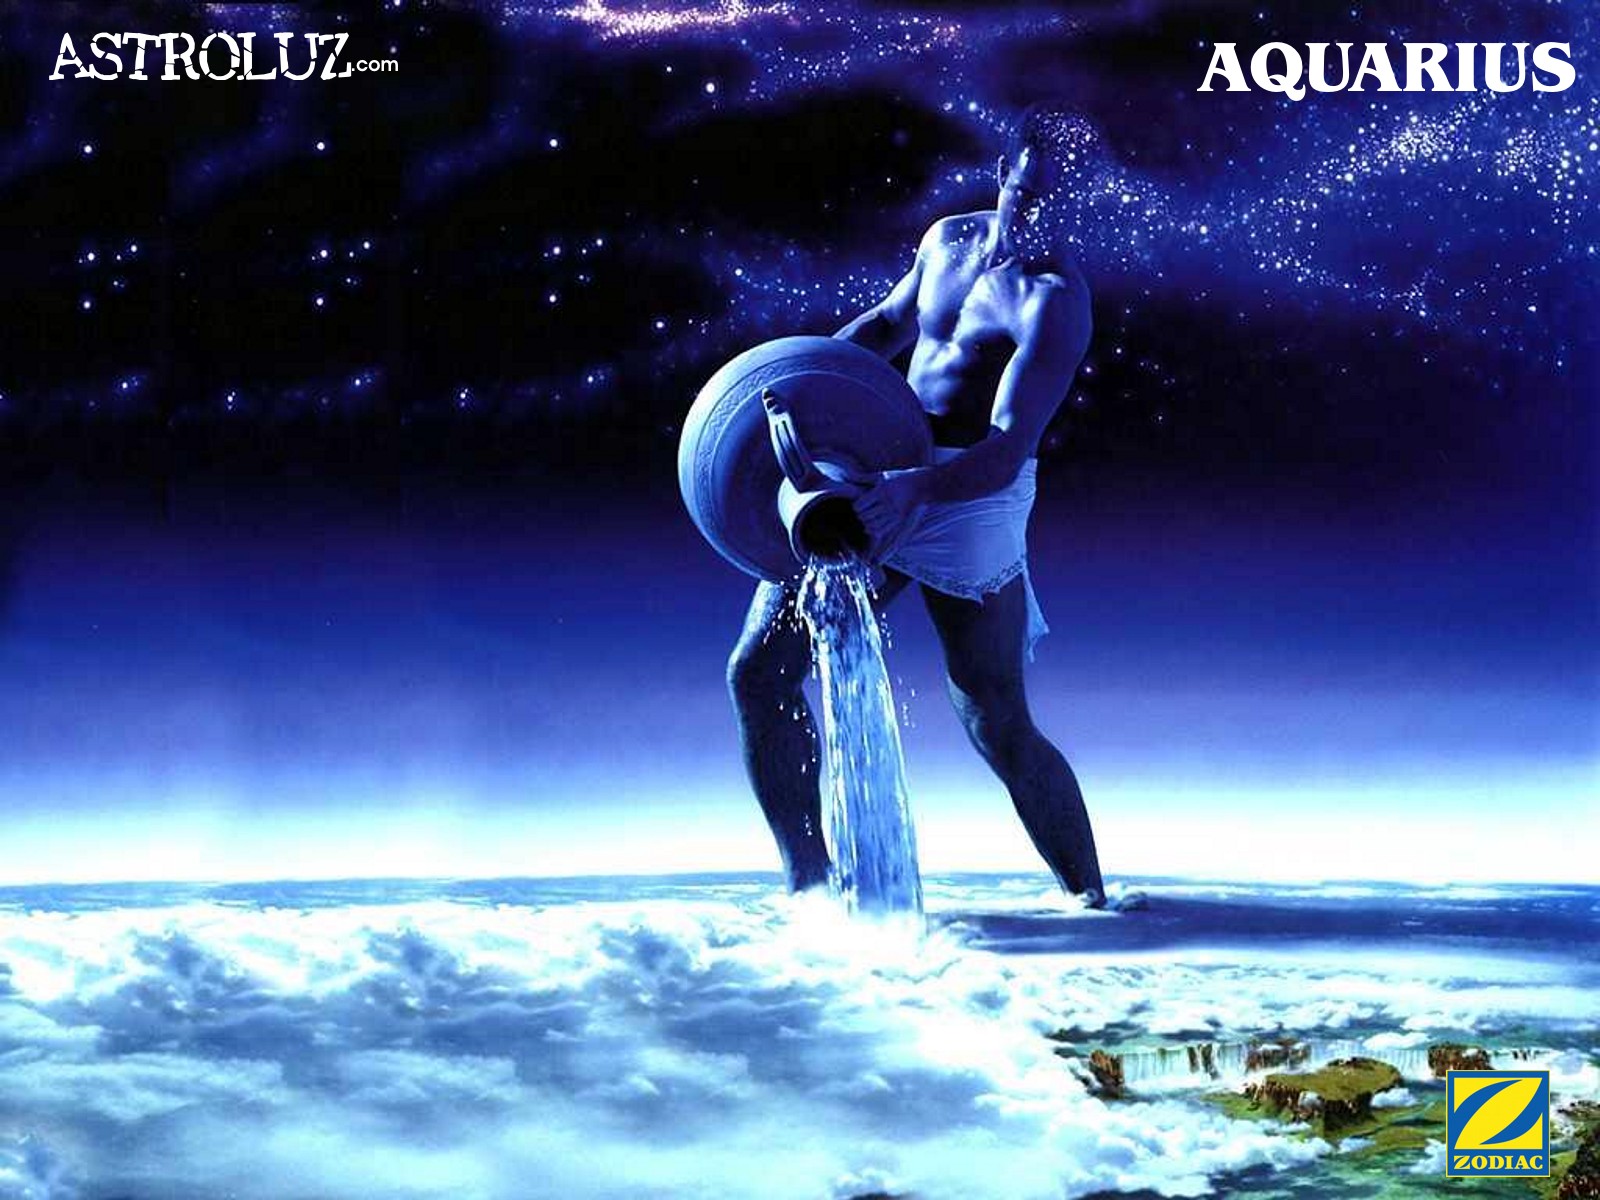 Aquarius Image HD Wallpaper And Background